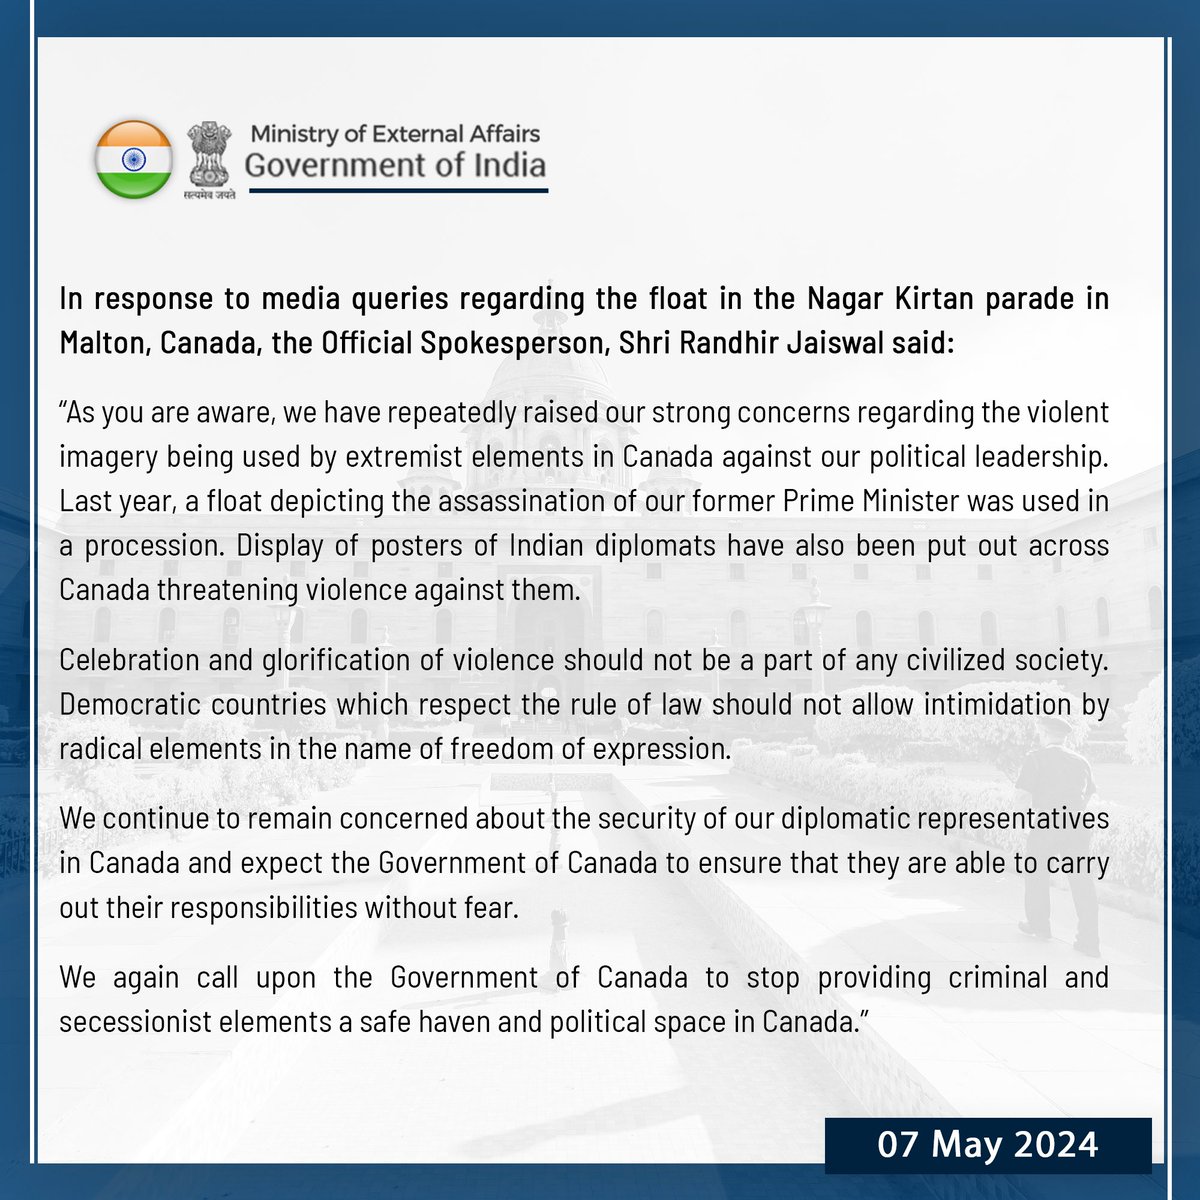 Our response to media queries regarding the float in the Nagar Kirtan parade in Malton, Canada: bit.ly/3QBeXsn